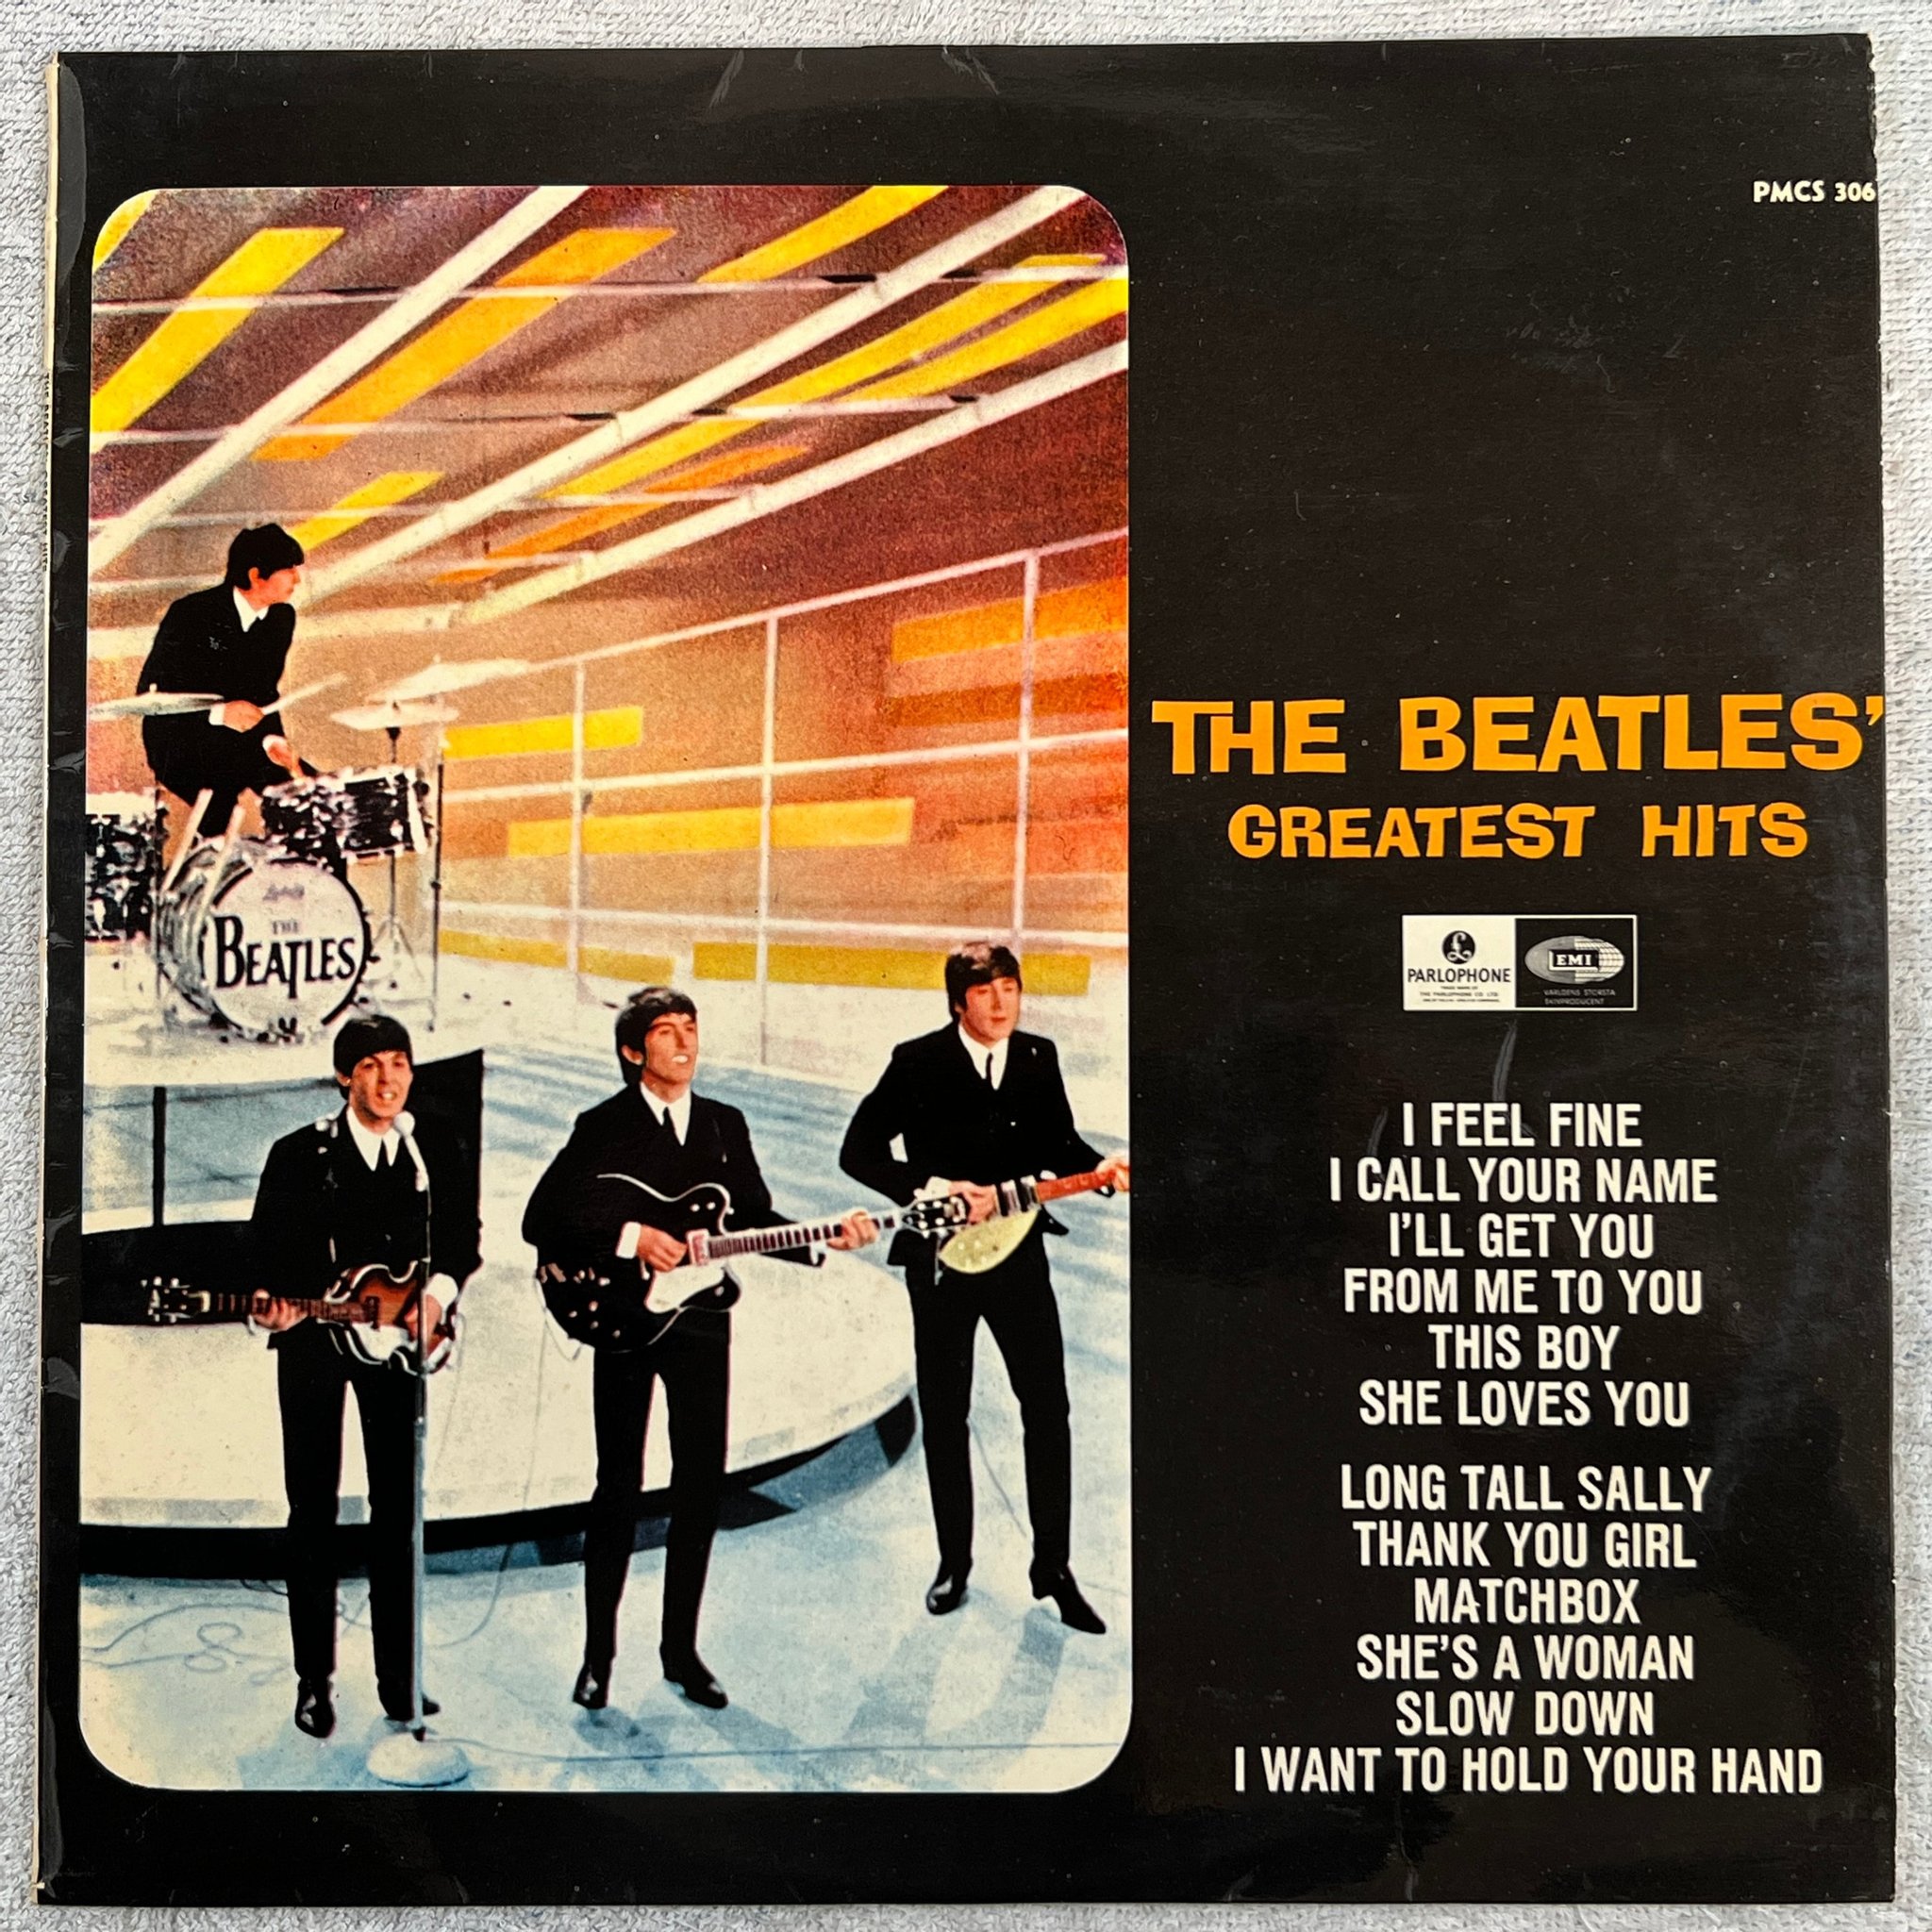 Omslagsbild för skivan THE BEATLES greatest hits LP -65 Swe PARLOPHONE PMCS 306 **rare**